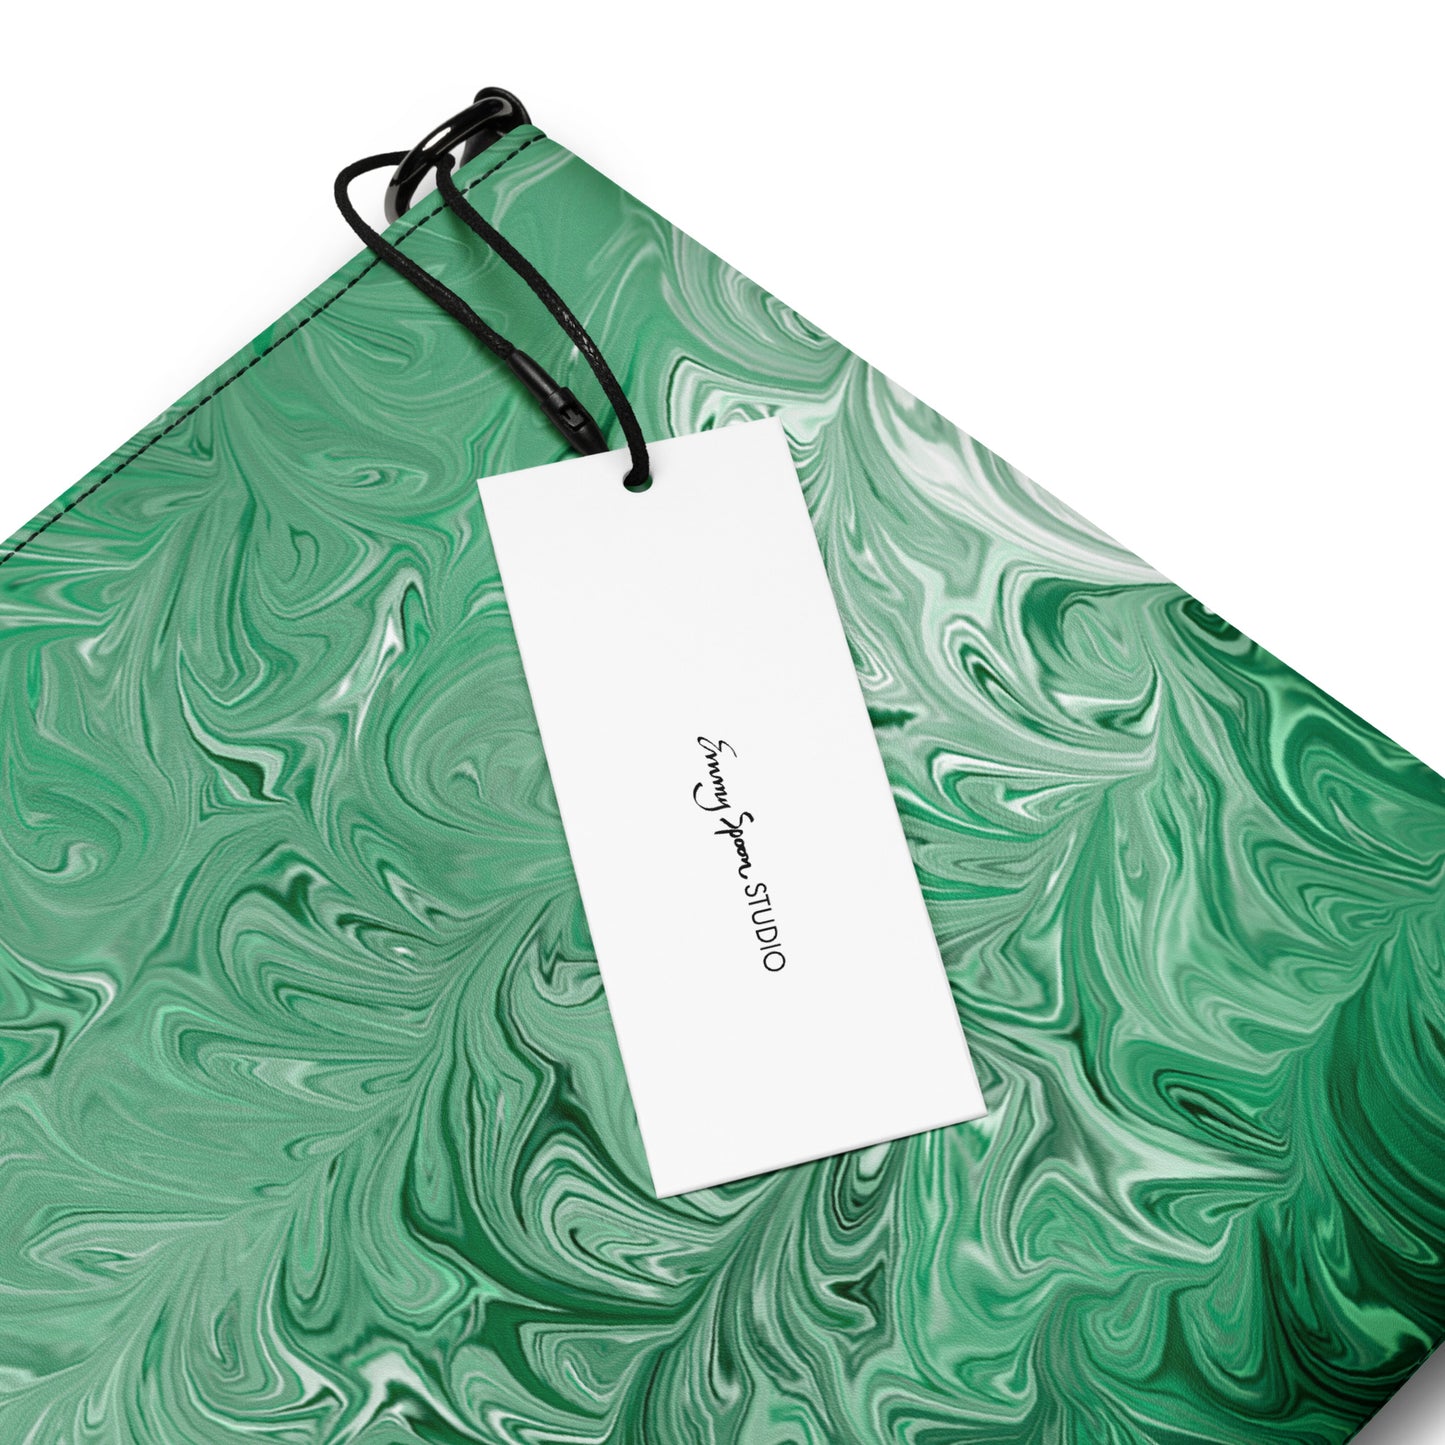 Green Swirl Crossbody bag